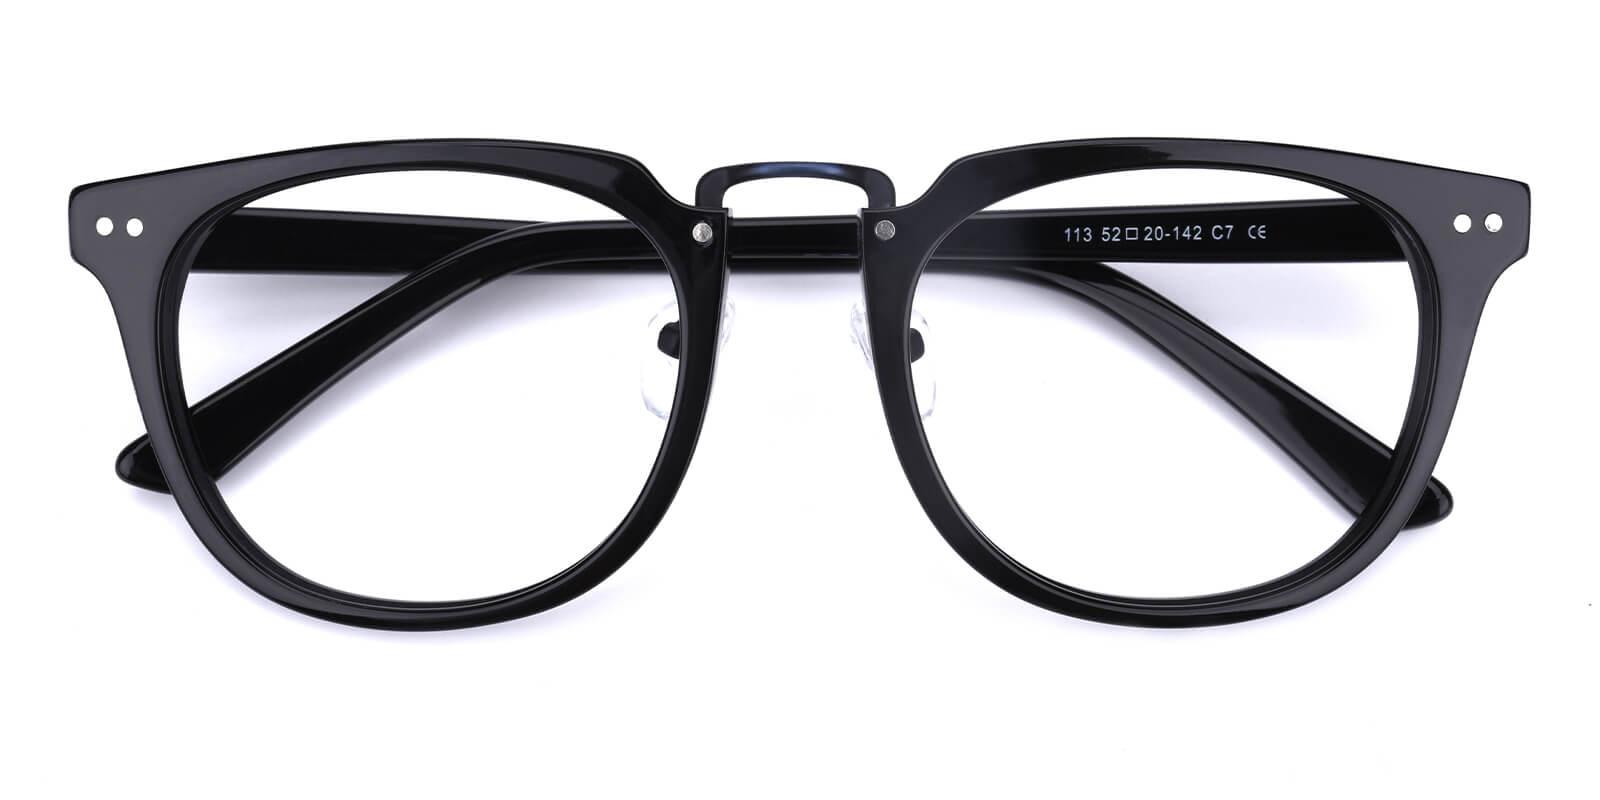 Crave-Black-Square-Acetate-Eyeglasses-detail